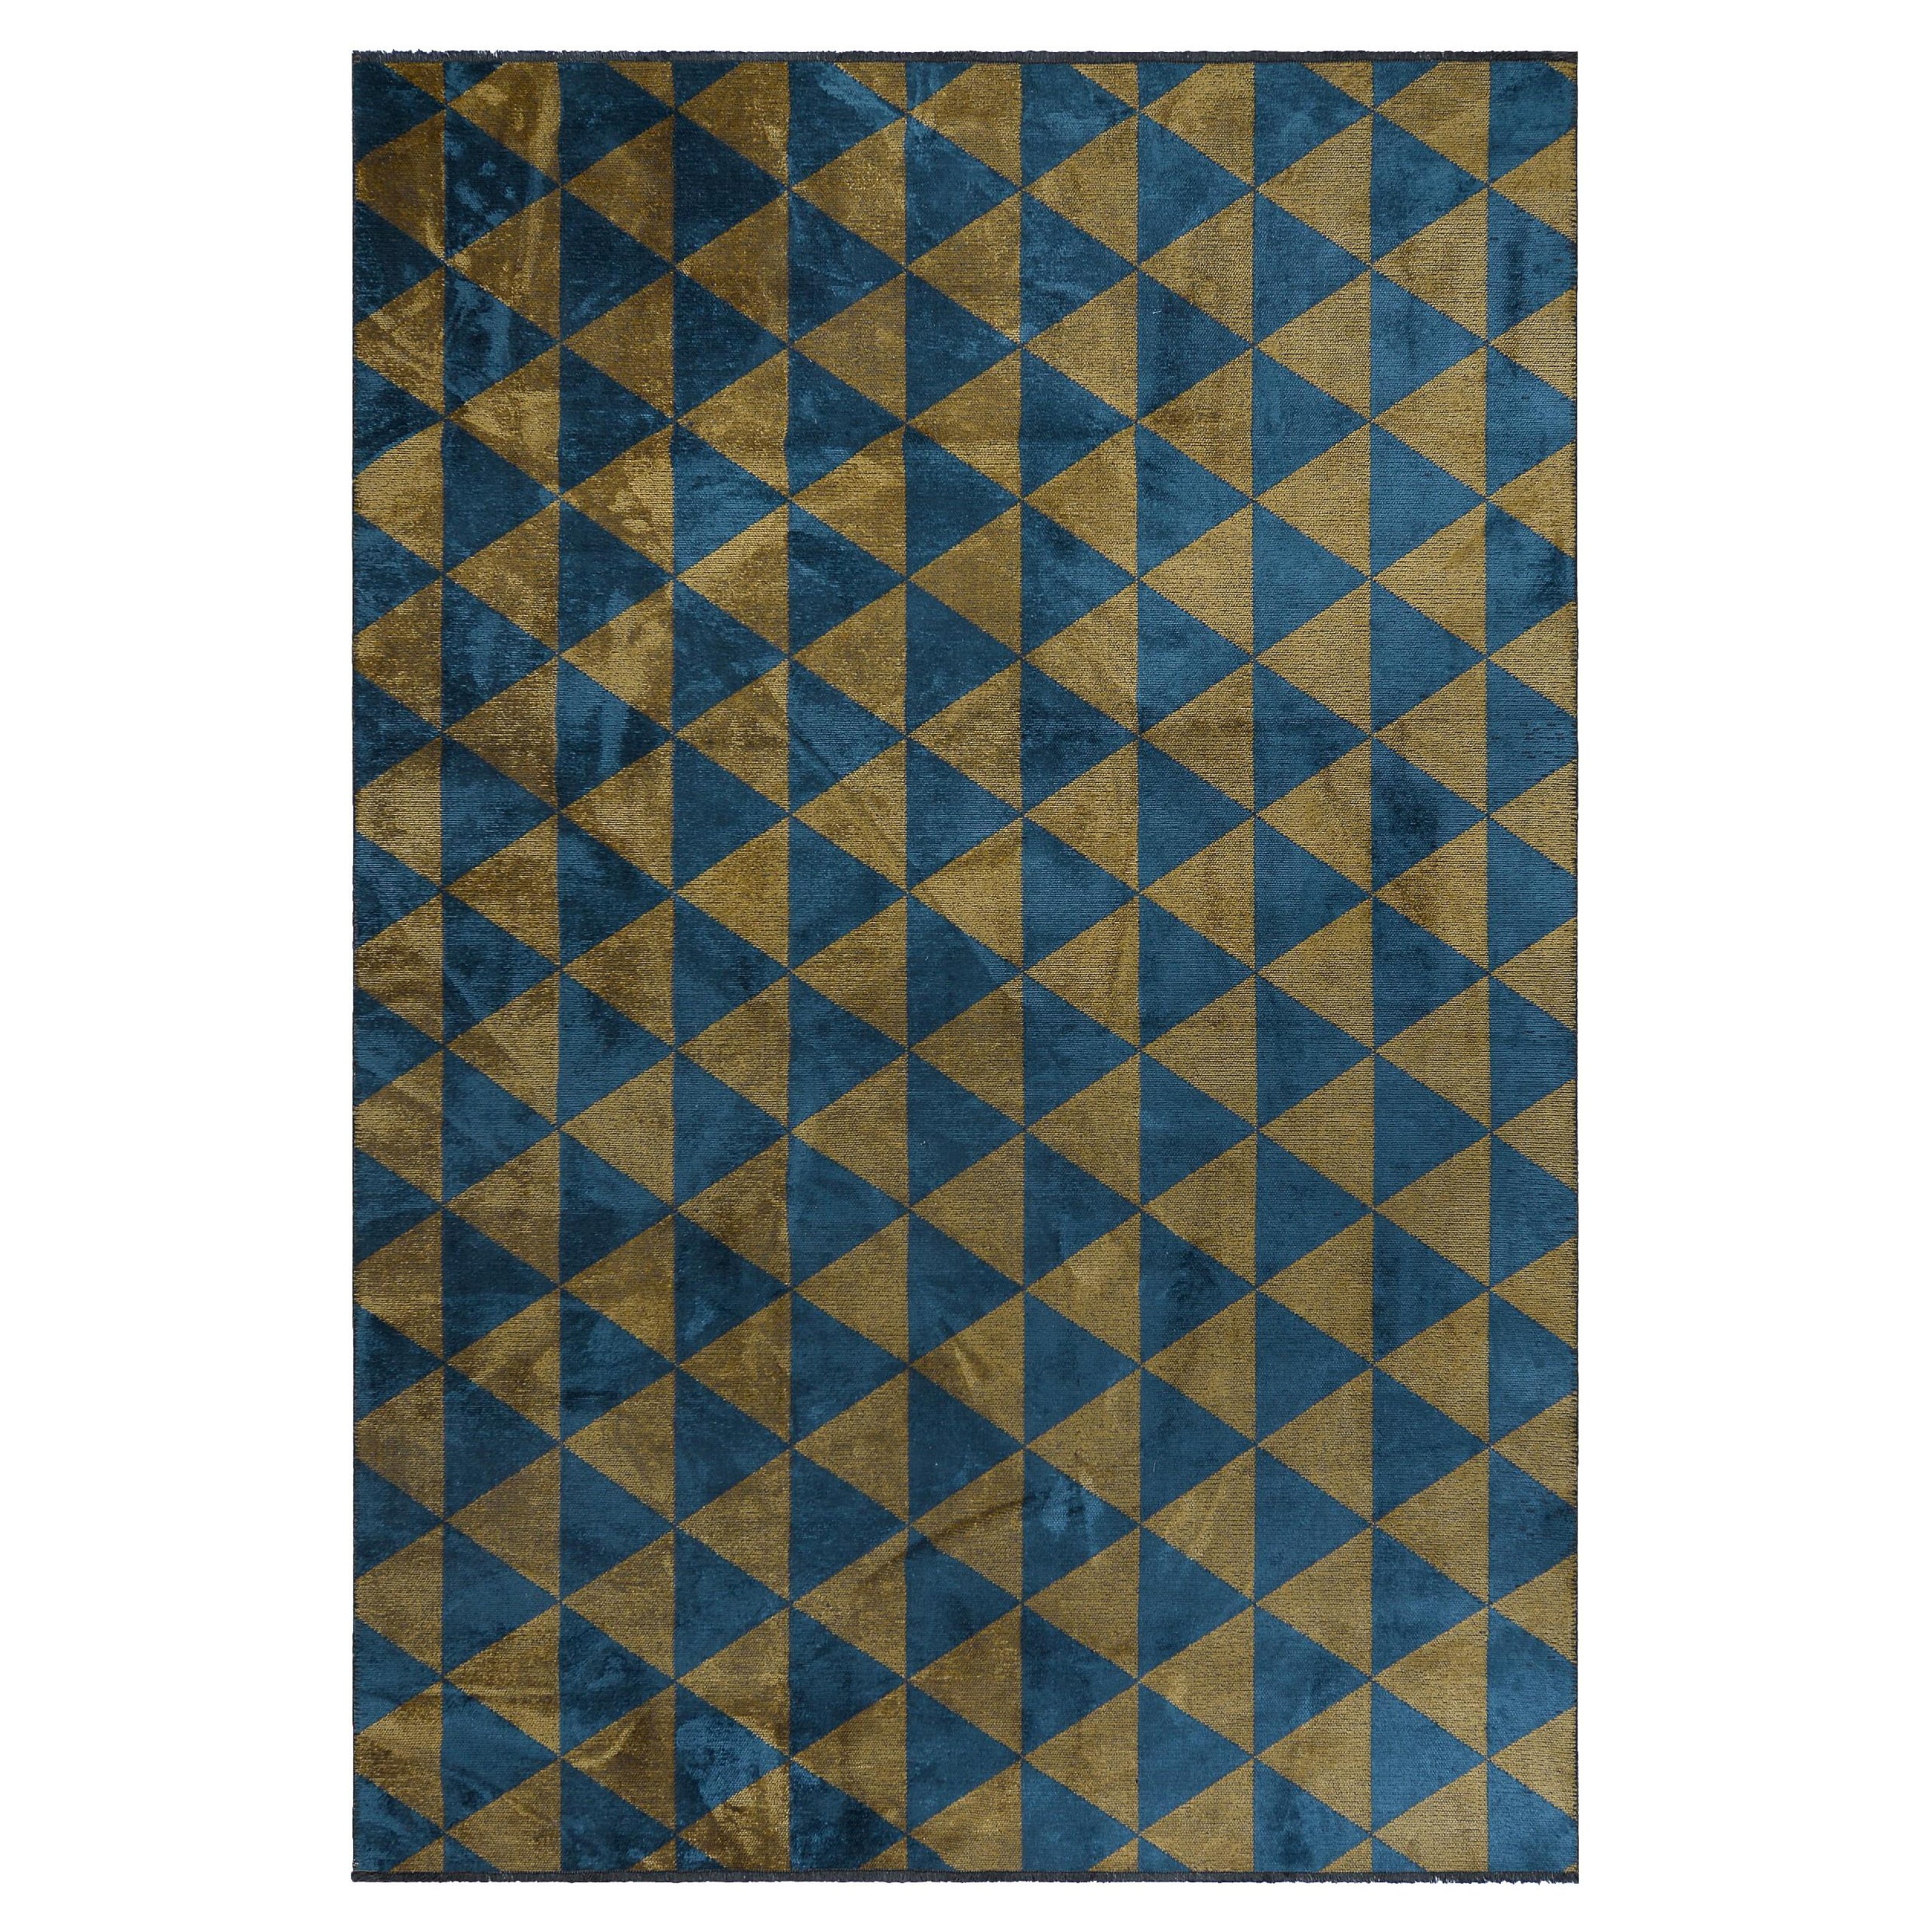 For Sale:  (Blue) Contemporary Geometric Luxury Area Rug